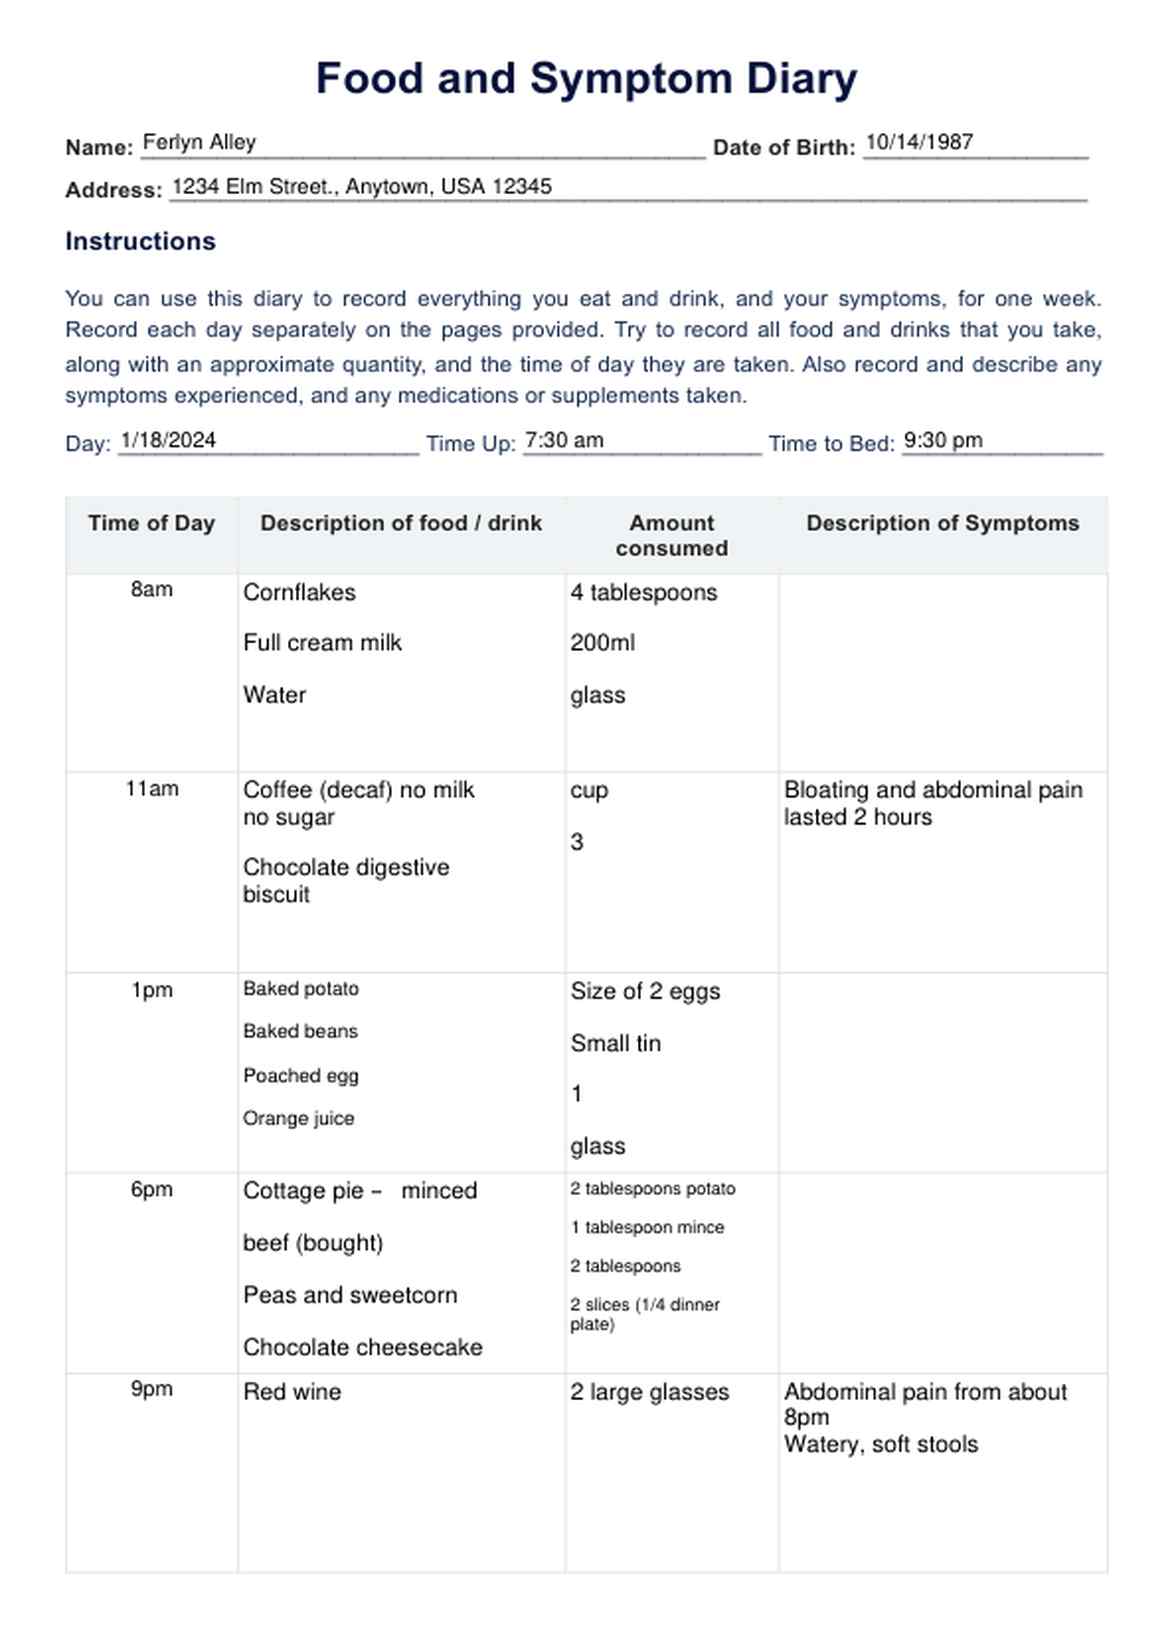 Food and Symptom Diary PDF PDF Example